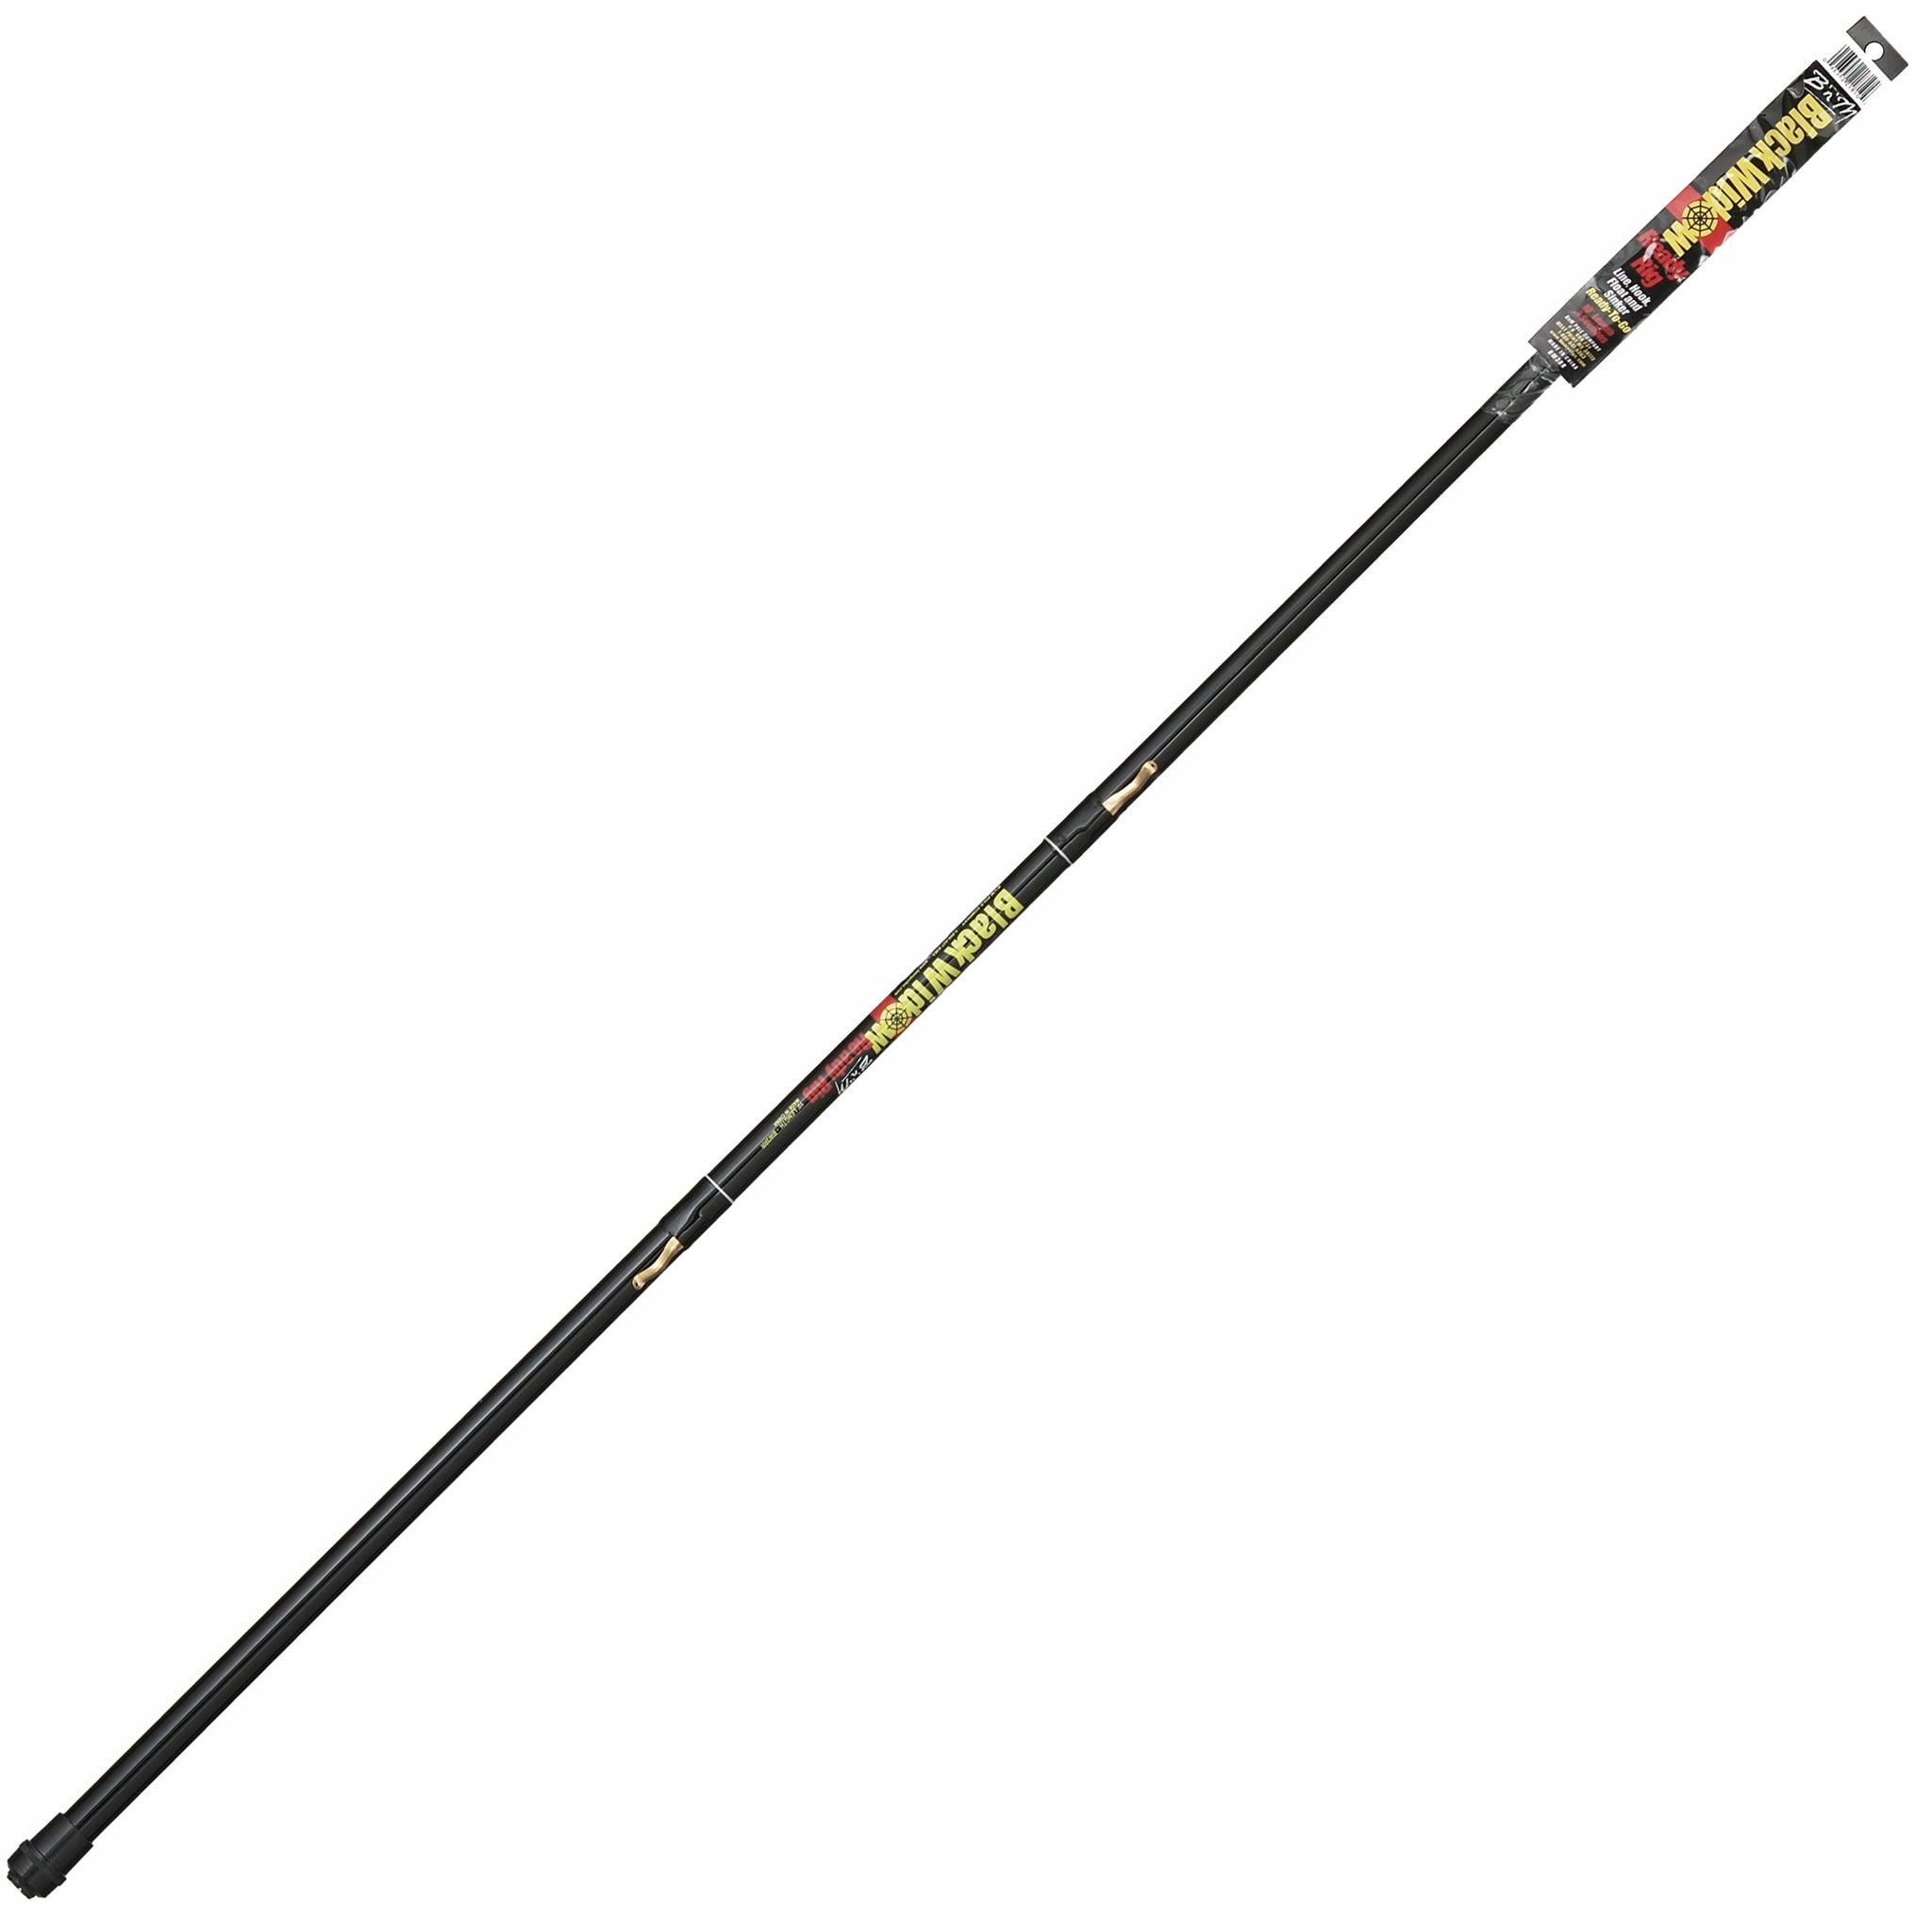 B&M BW144 Black Widow Telescopic Fishing Rod, Spinning Rods